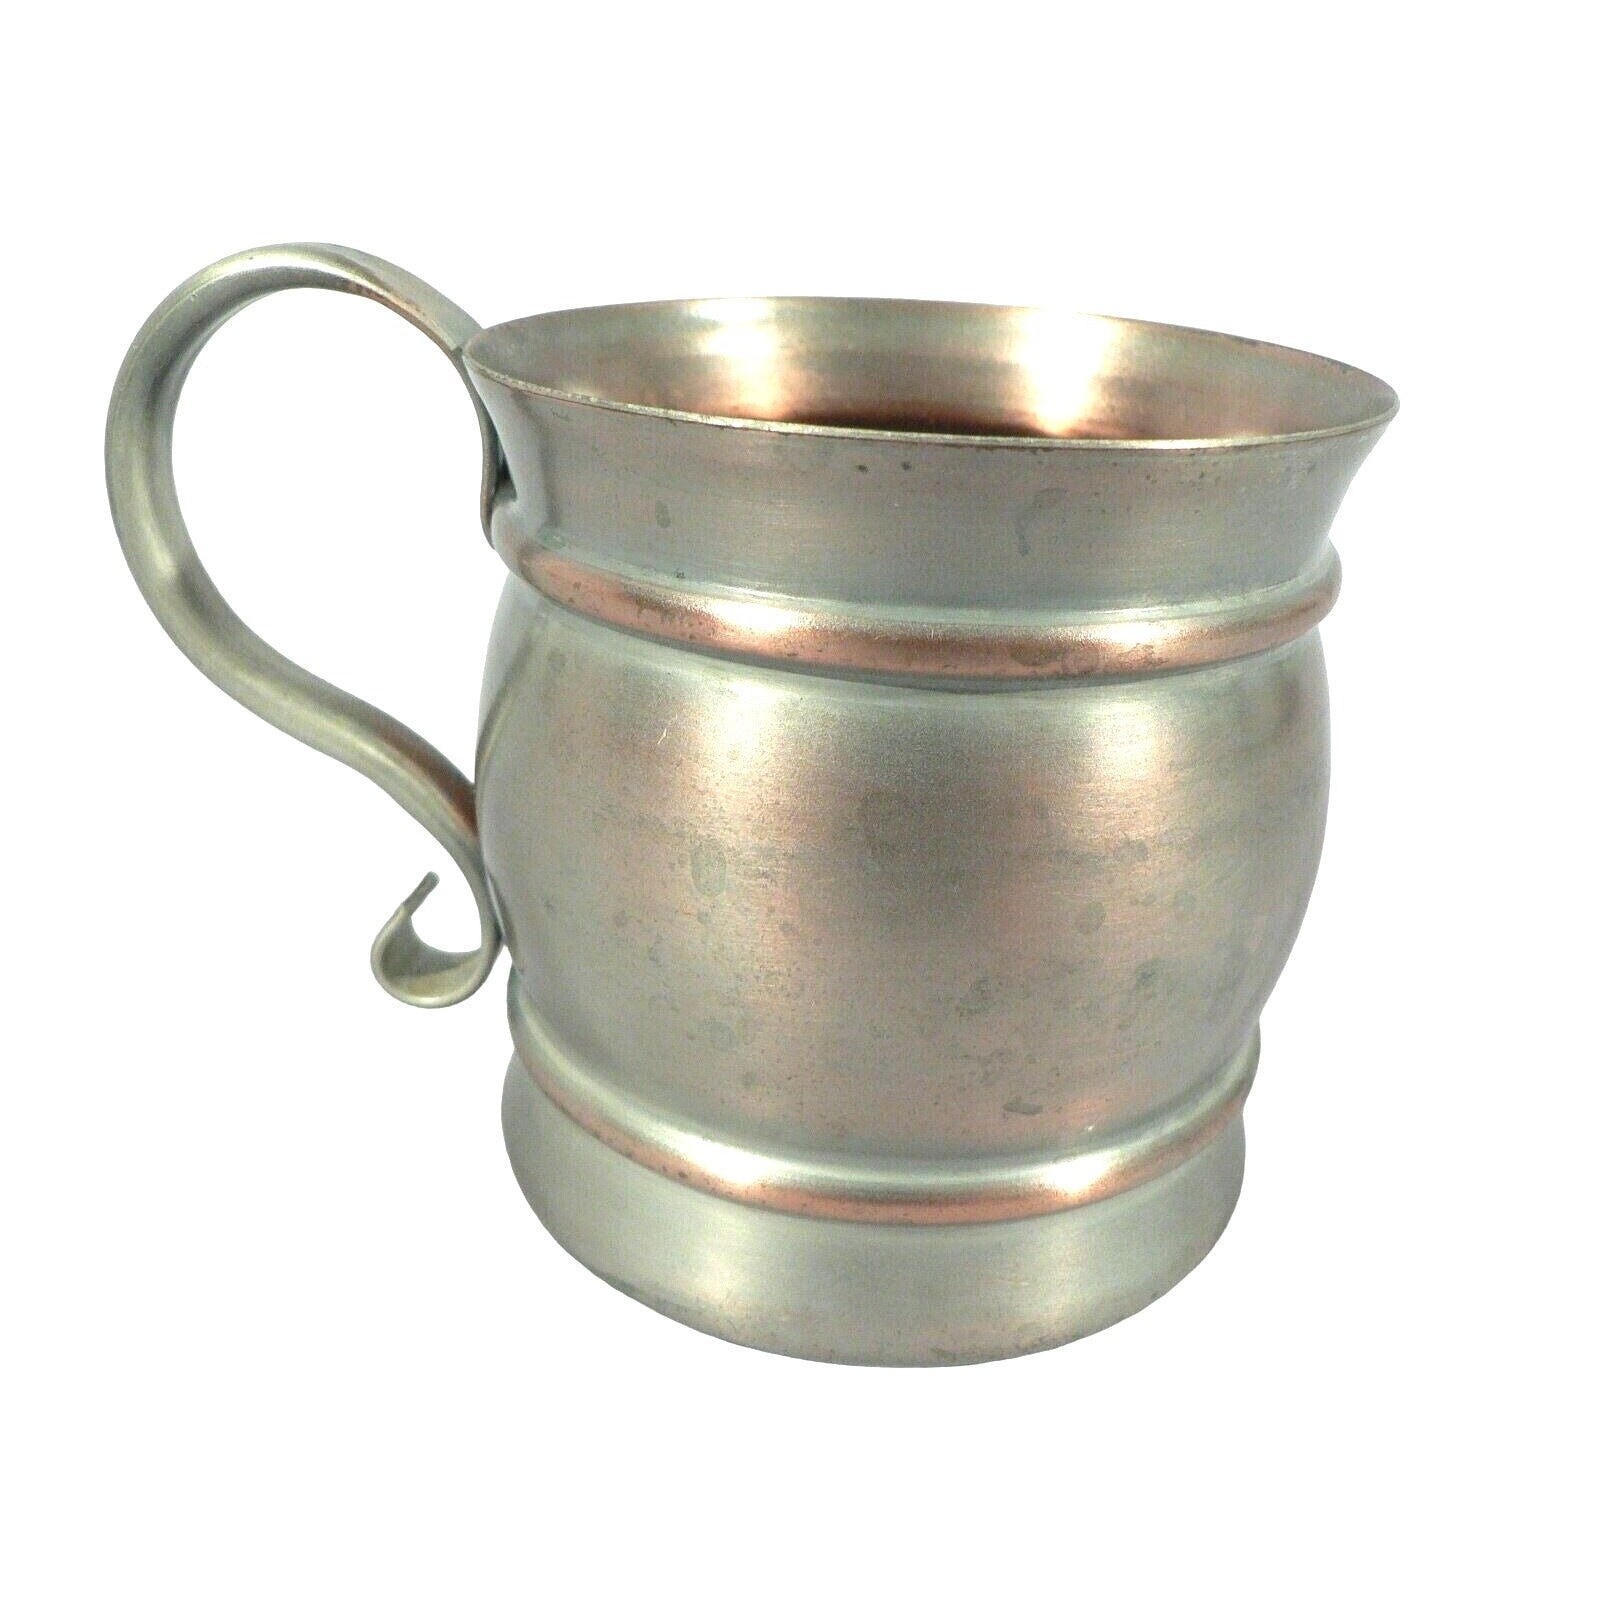 Copper cup mug mule by Gregorian Question mark handle nice even patina Vintage